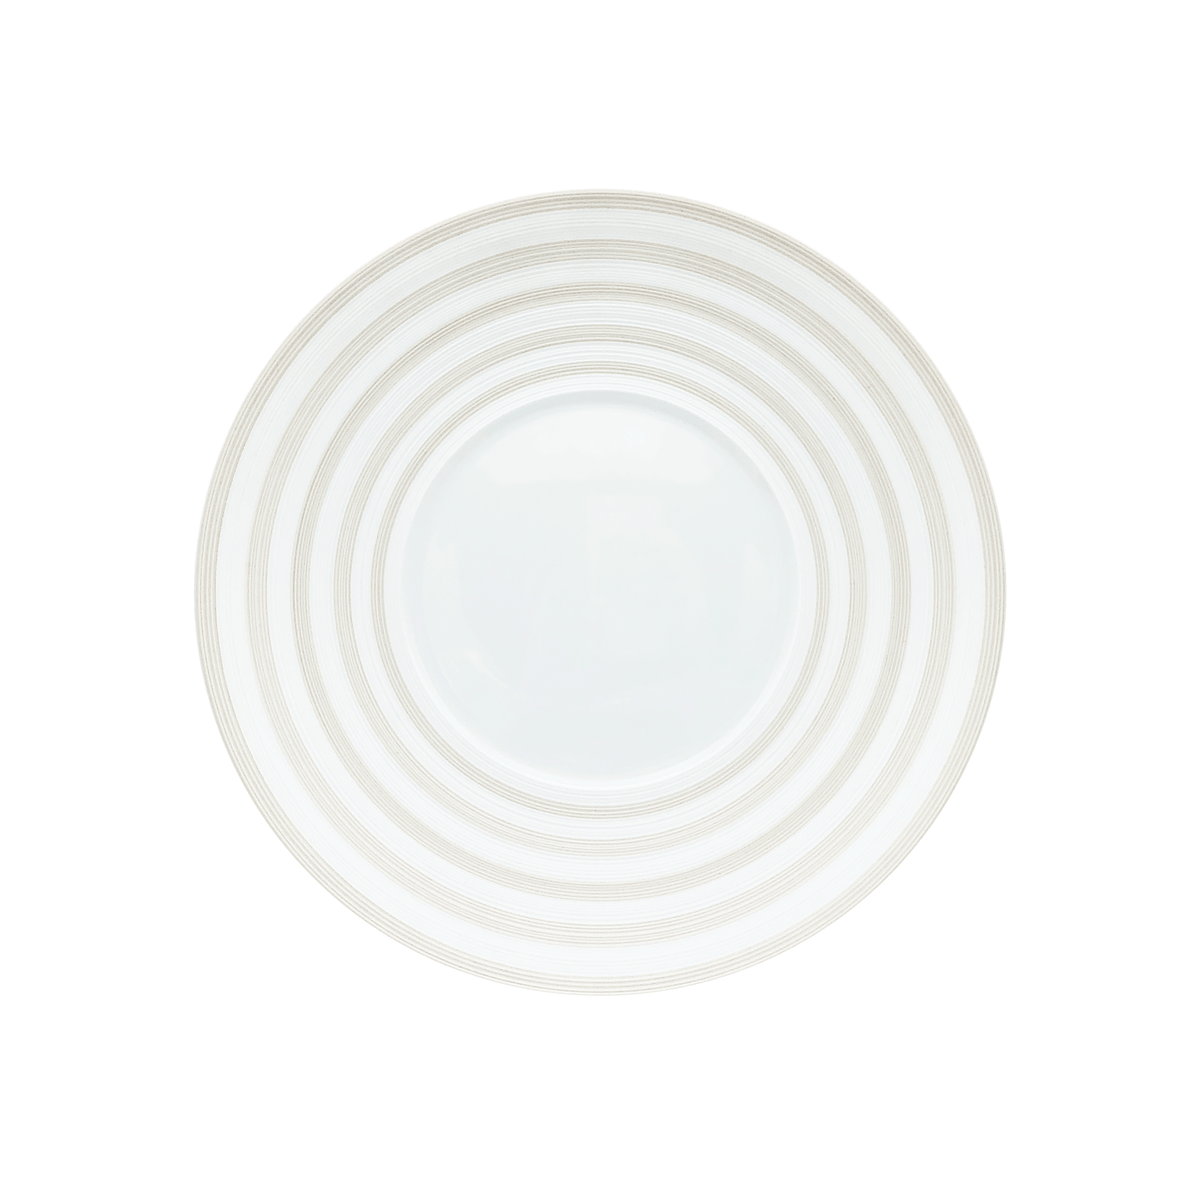 HEMISPHERE Striped Vanilla - Dinner plate